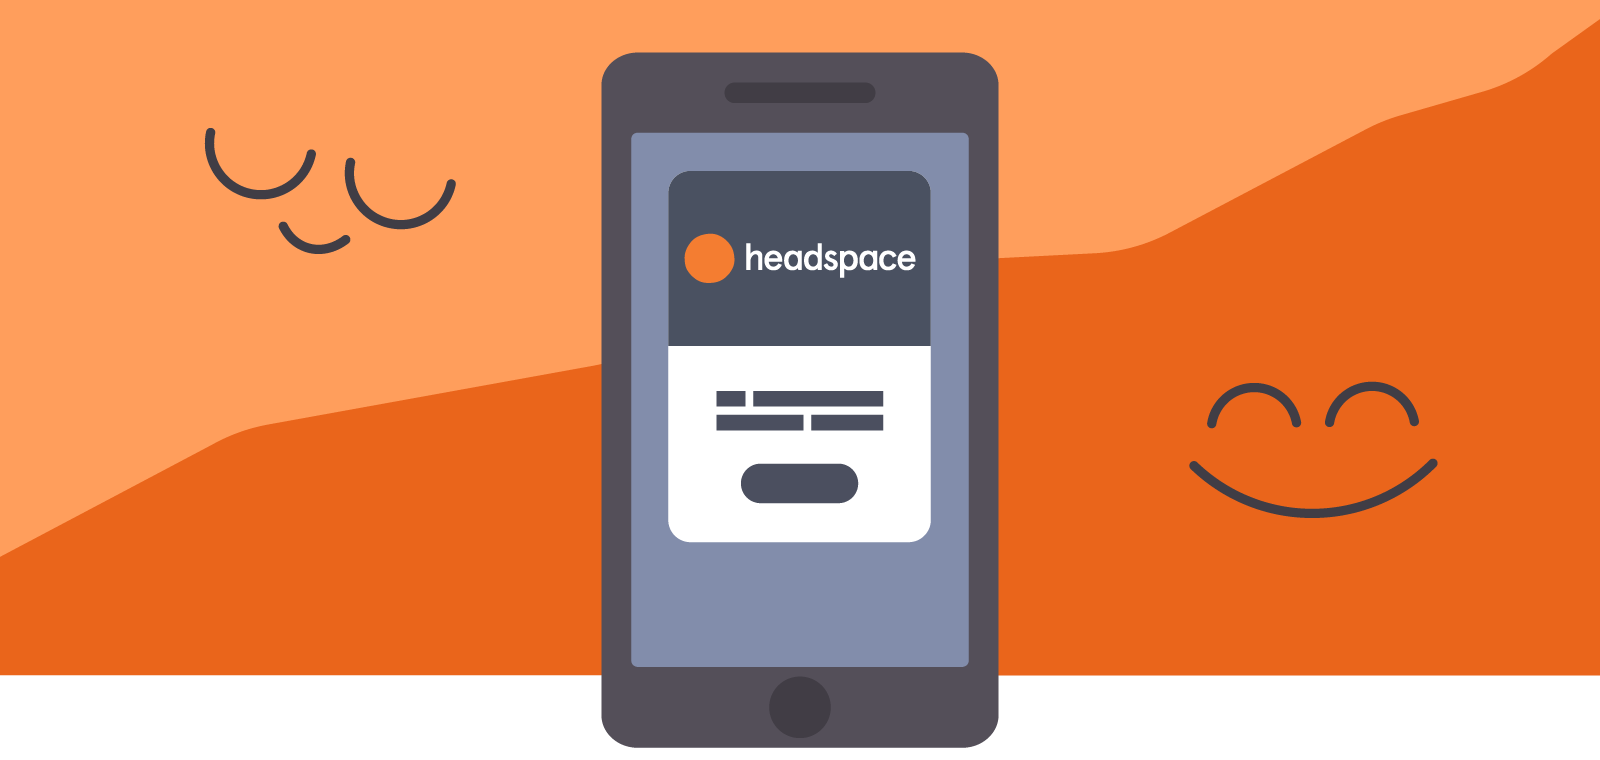 App like Headspace